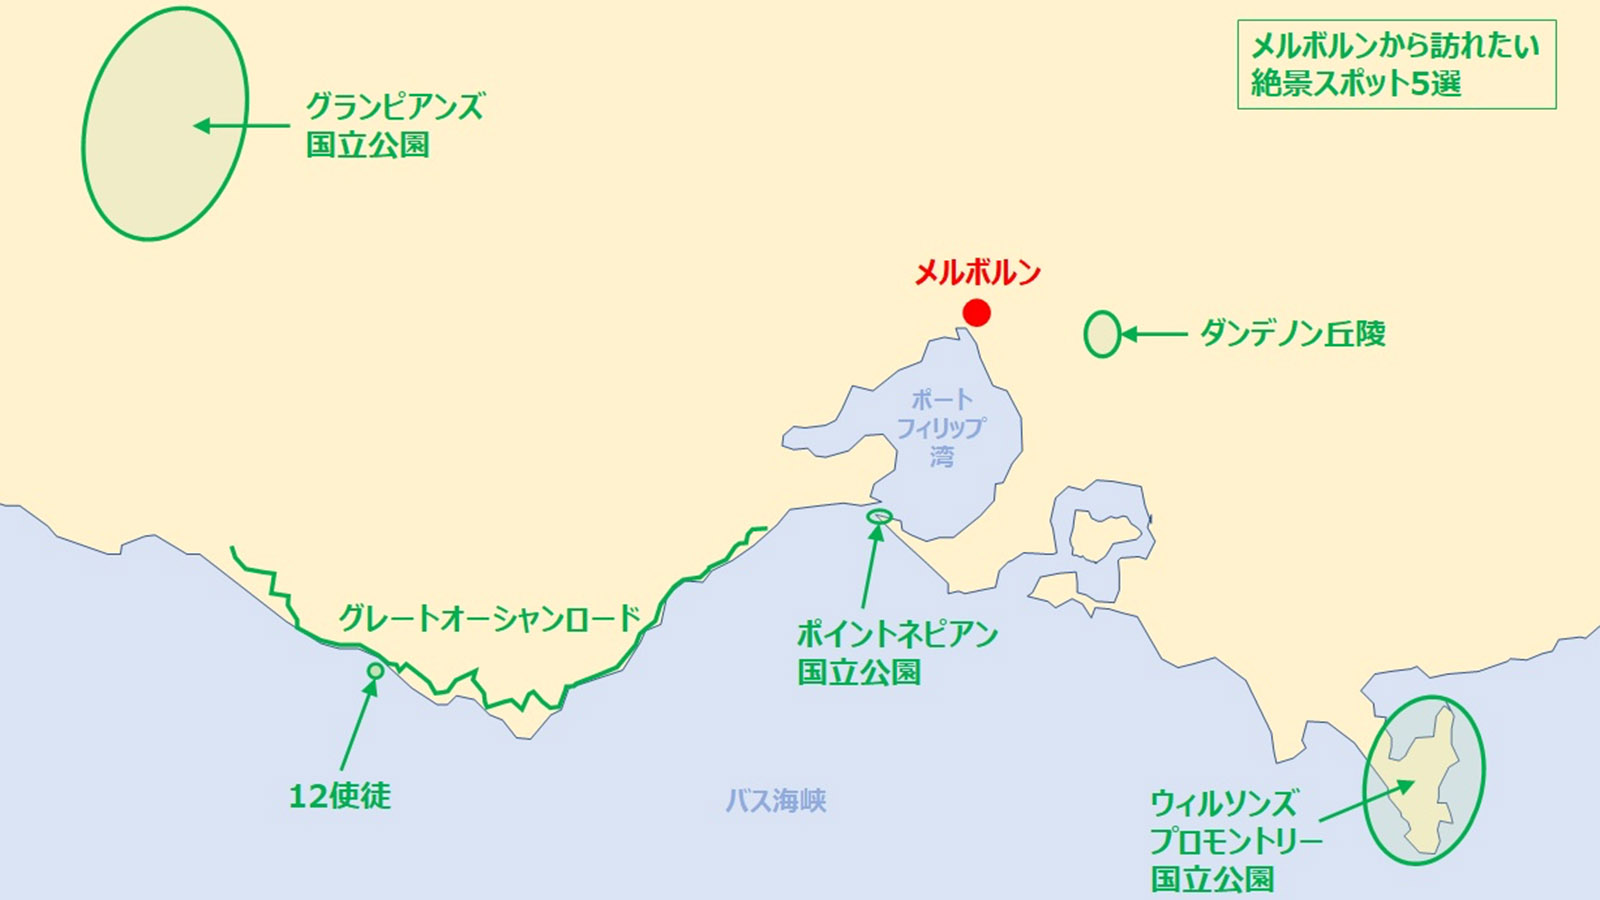 Map of Victoria  ©Mami Takada